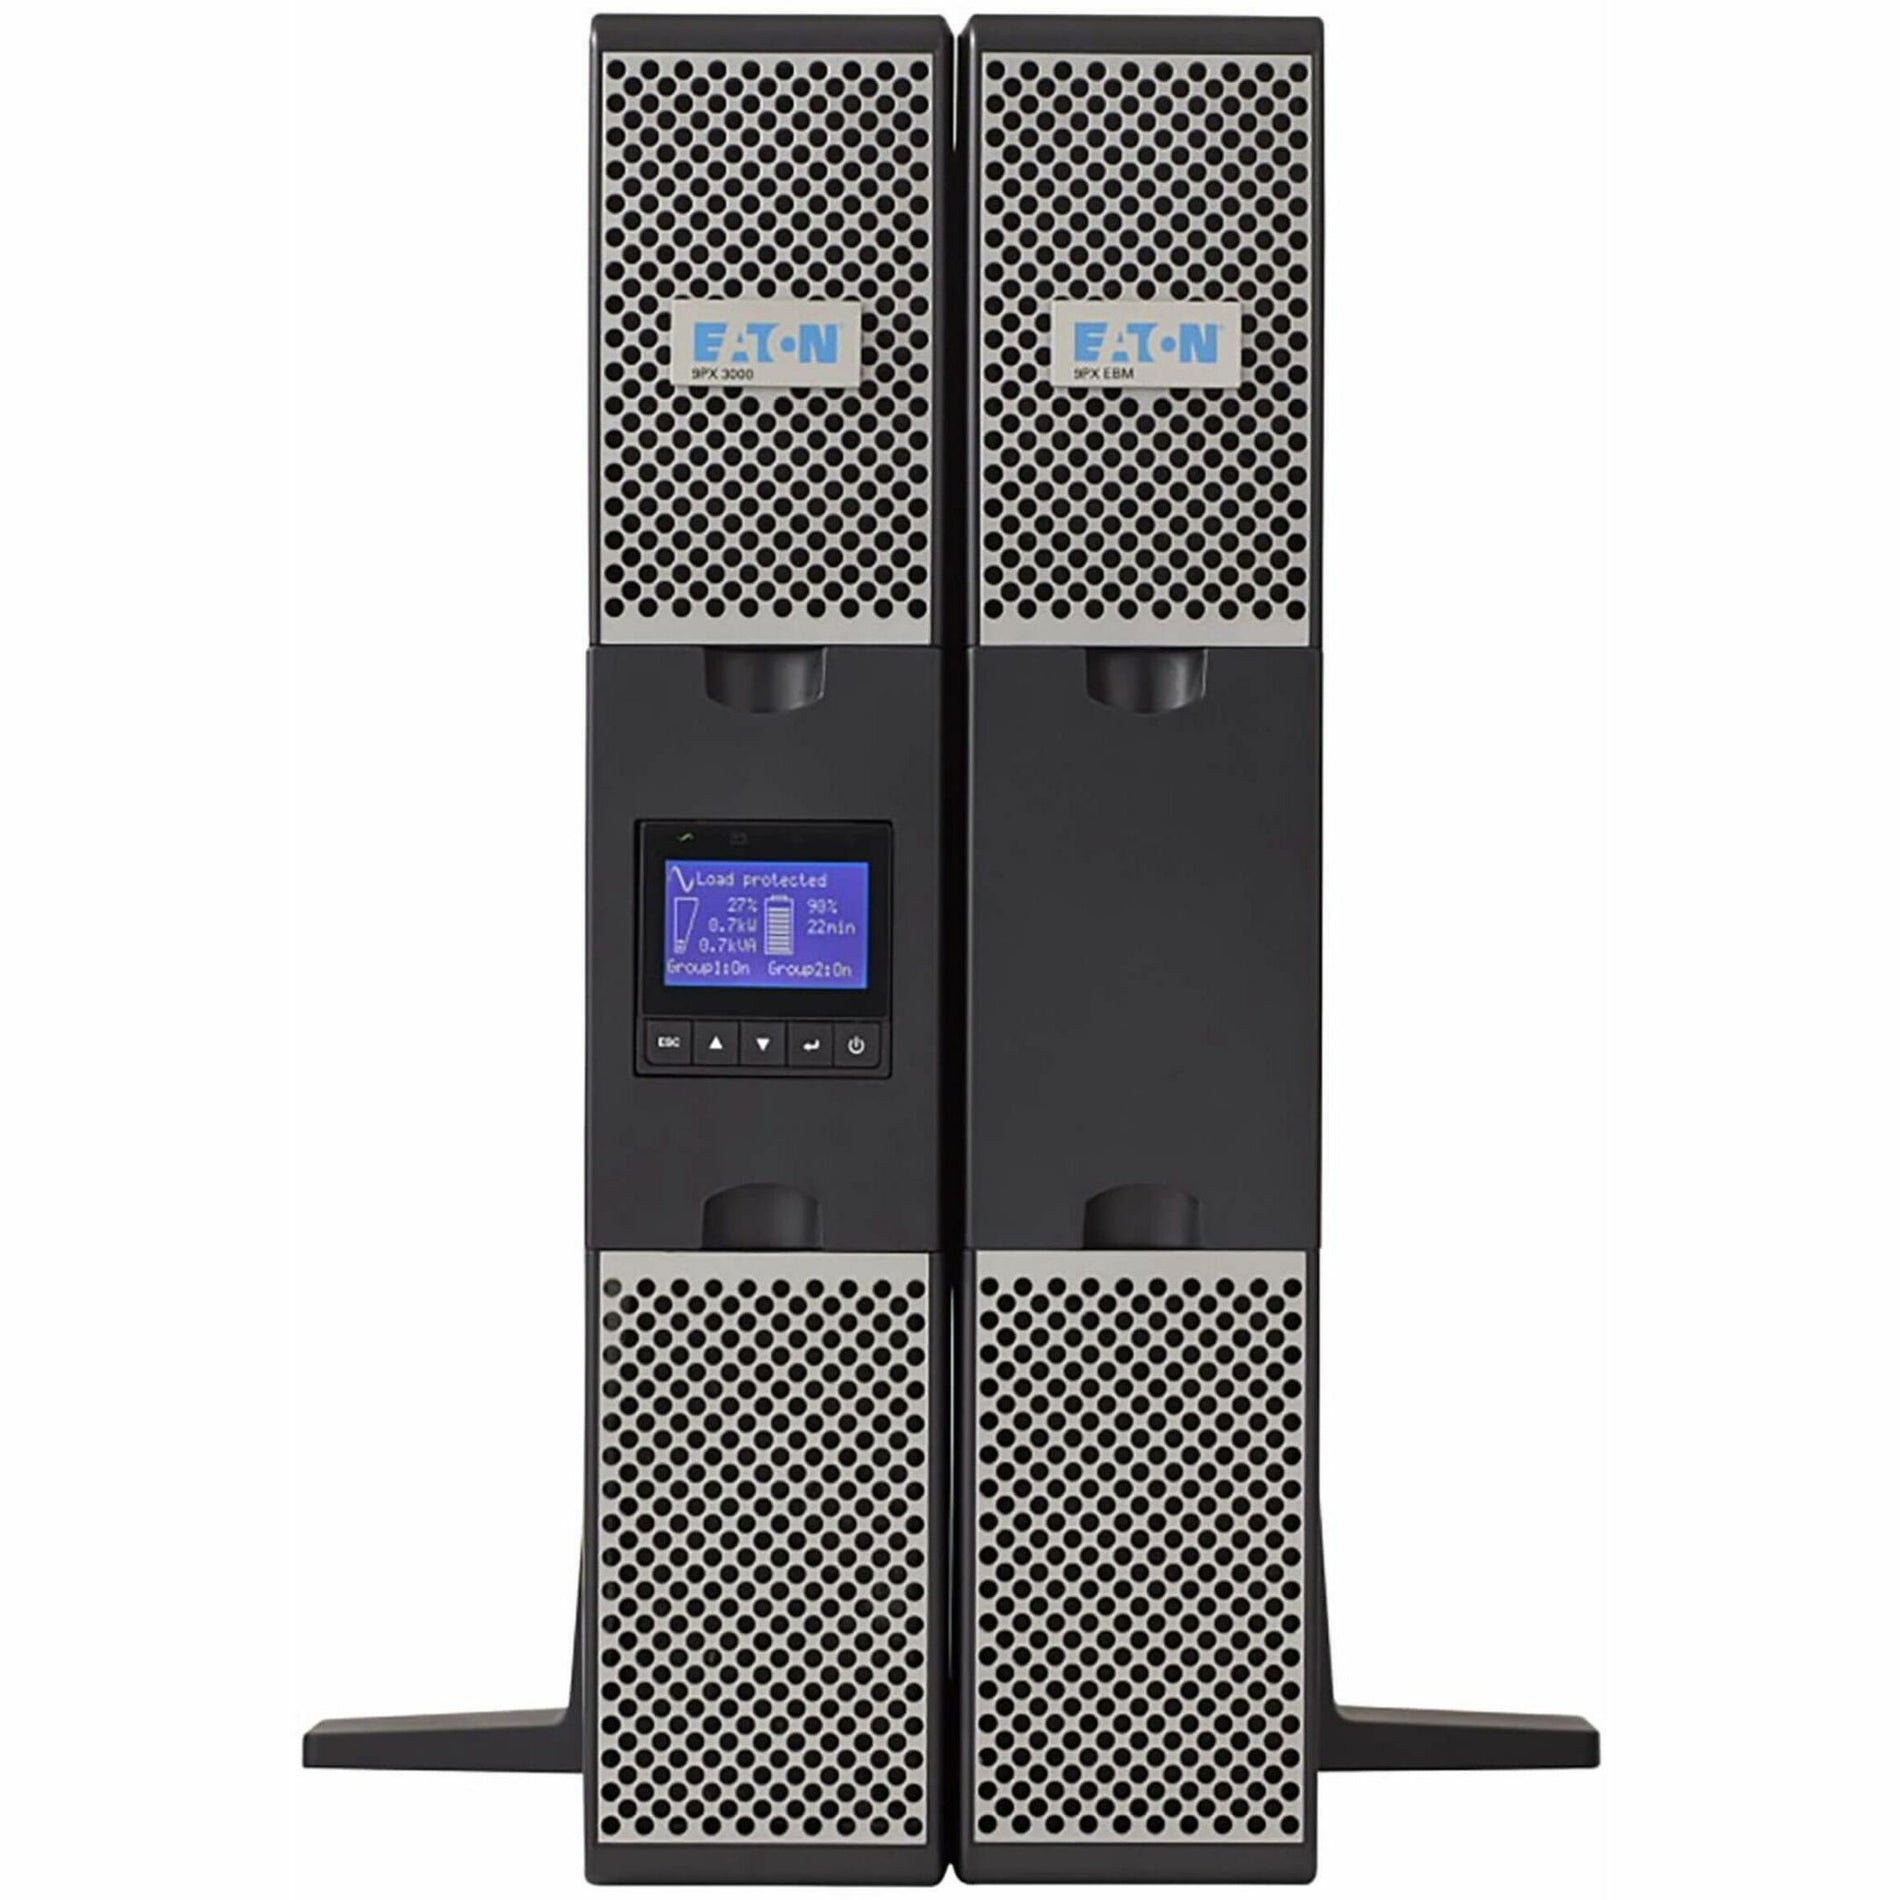 Eaton 9PX700RT 700 VA UPS, Double Conversion Online UPS, 120V AC, 630W Load Capacity